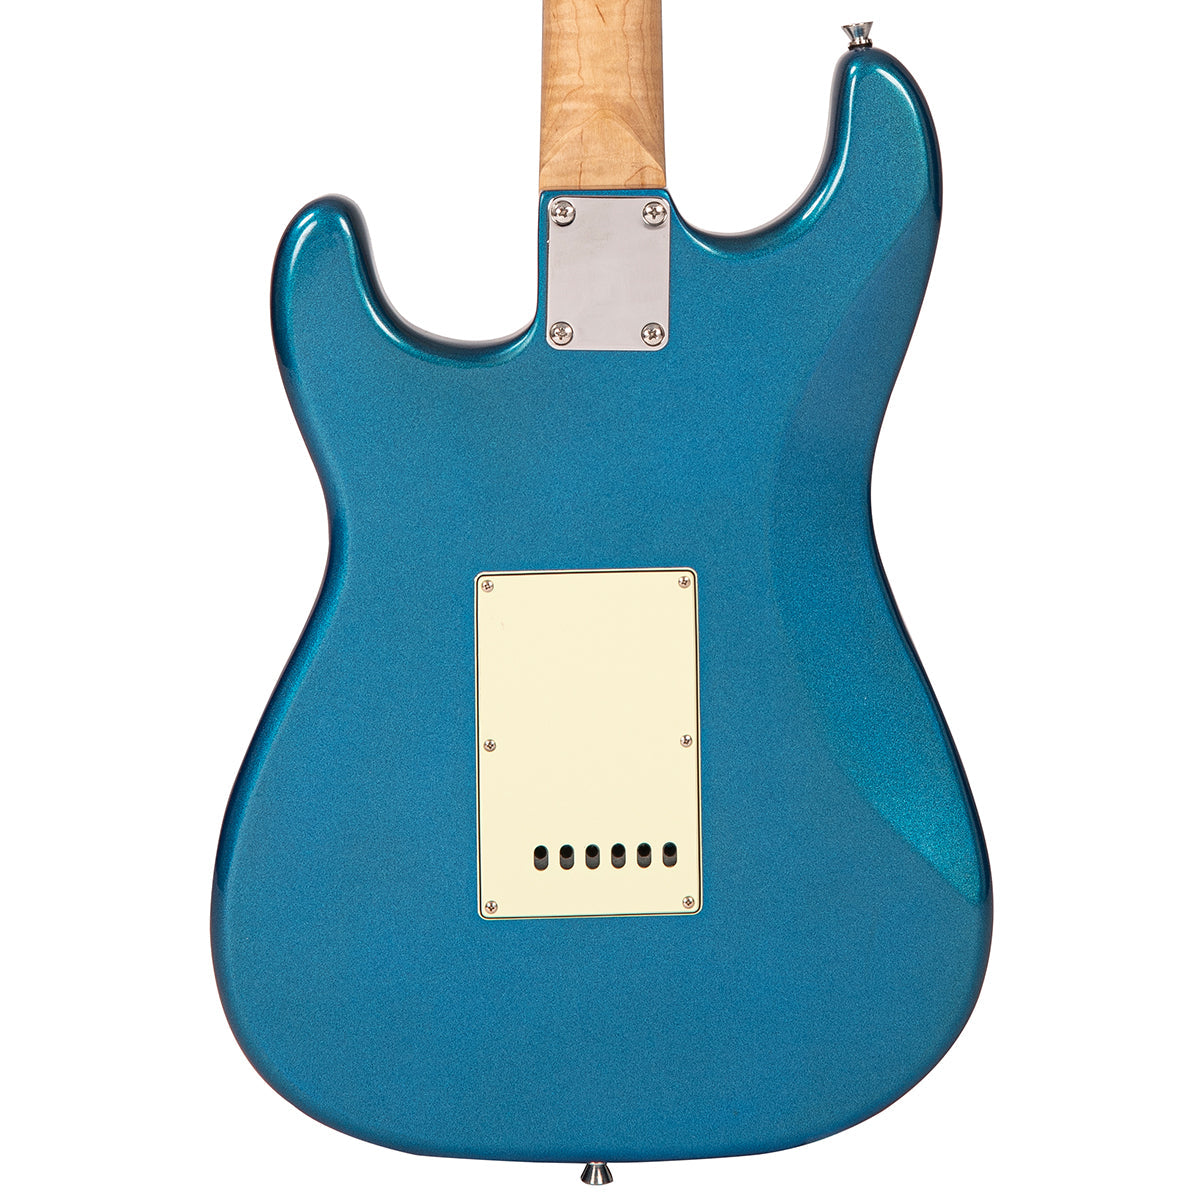 Vintage V60 Coaster Series Electric Guitar ~ Candy Apple Blue, Electric Guitar for sale at Richards Guitars.